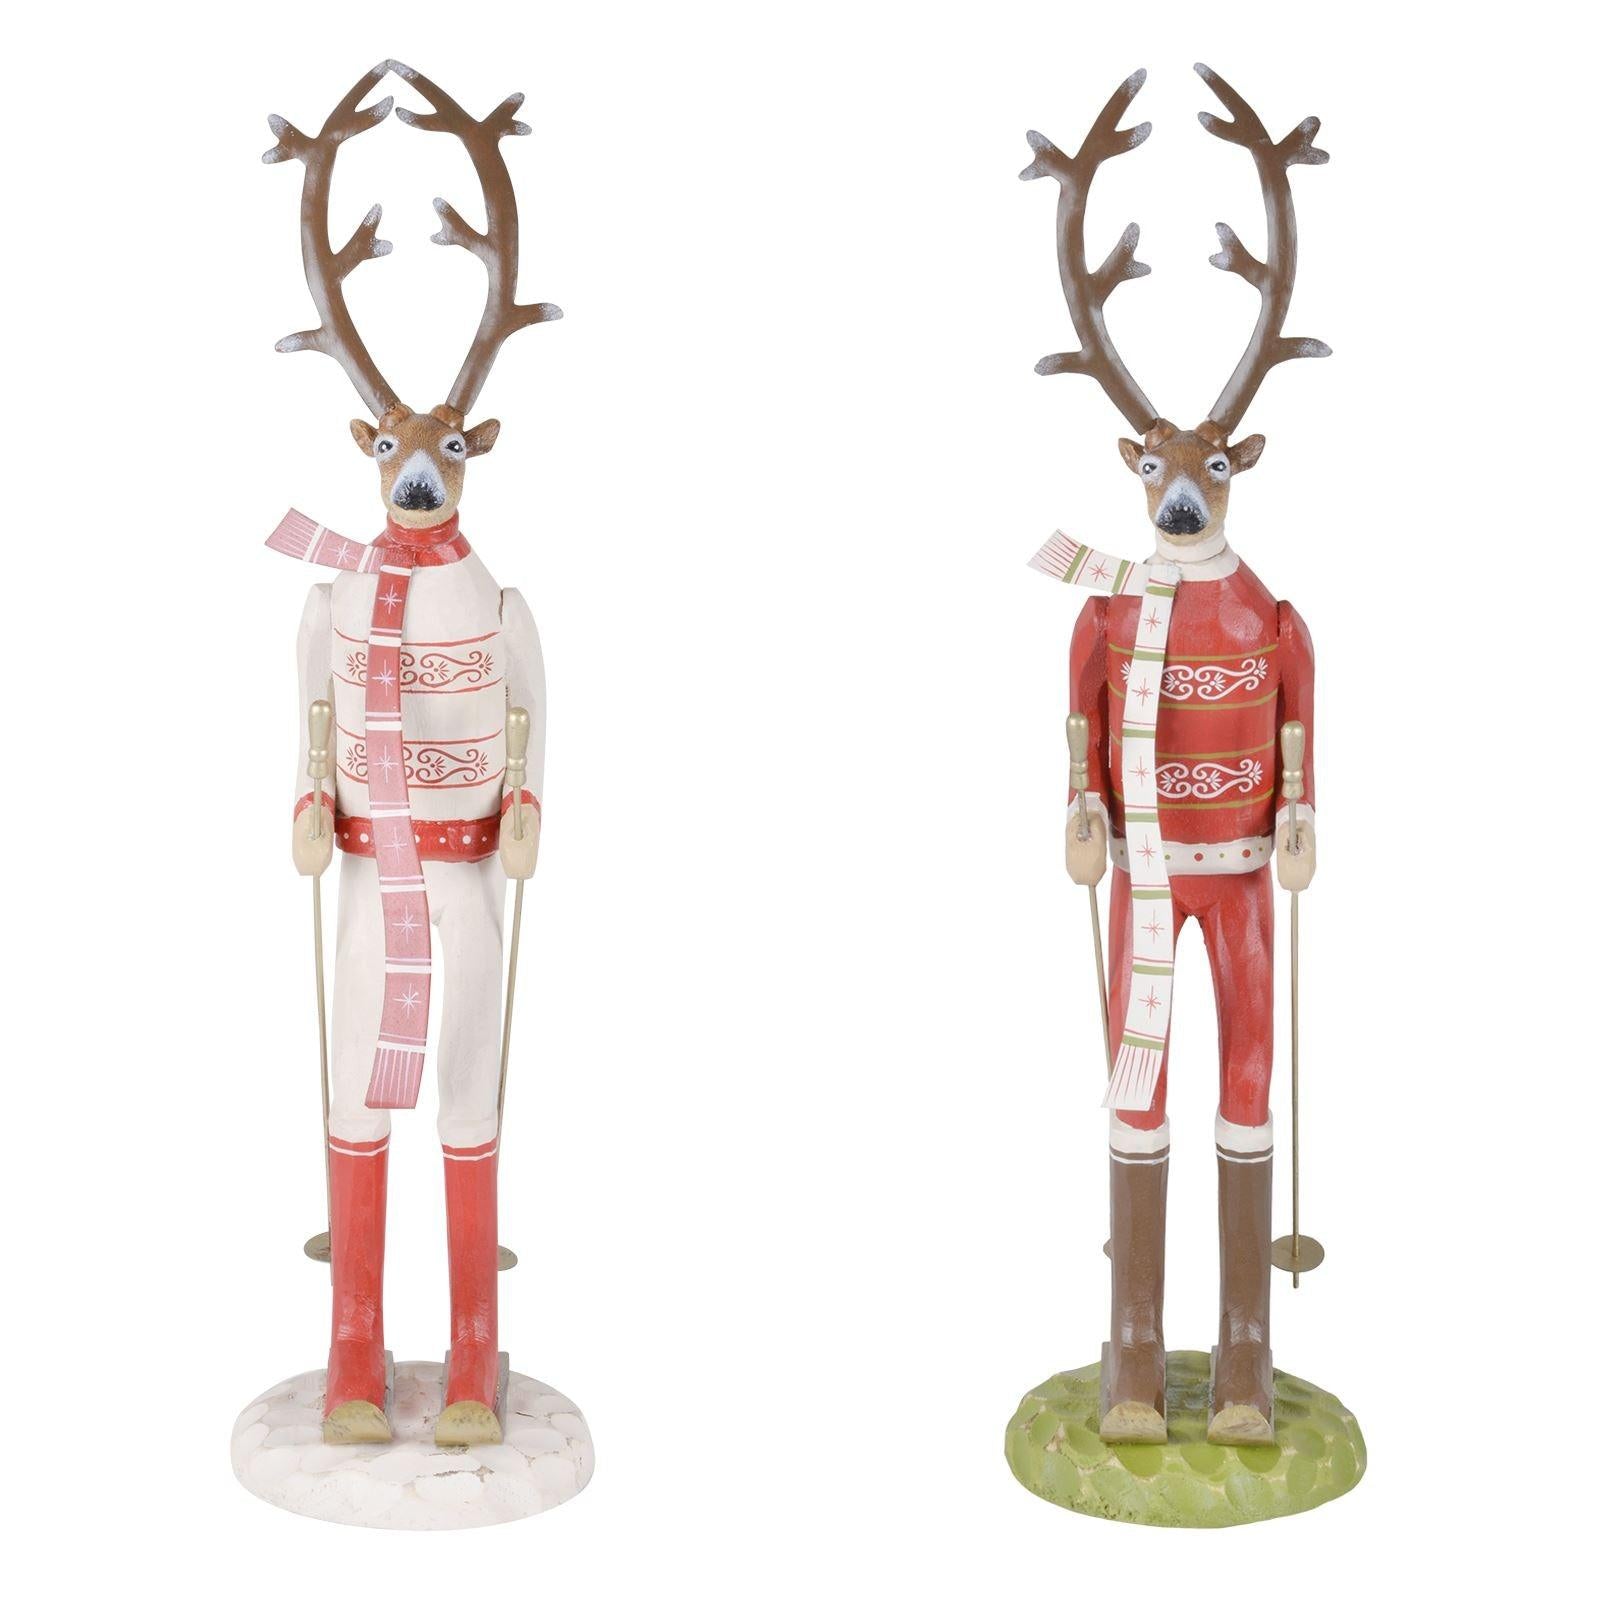 Mr Crimbo 17" Novelty Skiiing Reindeer Christmas Ornament - MrCrimbo.co.uk -XS4508 - Red -christmas decorations